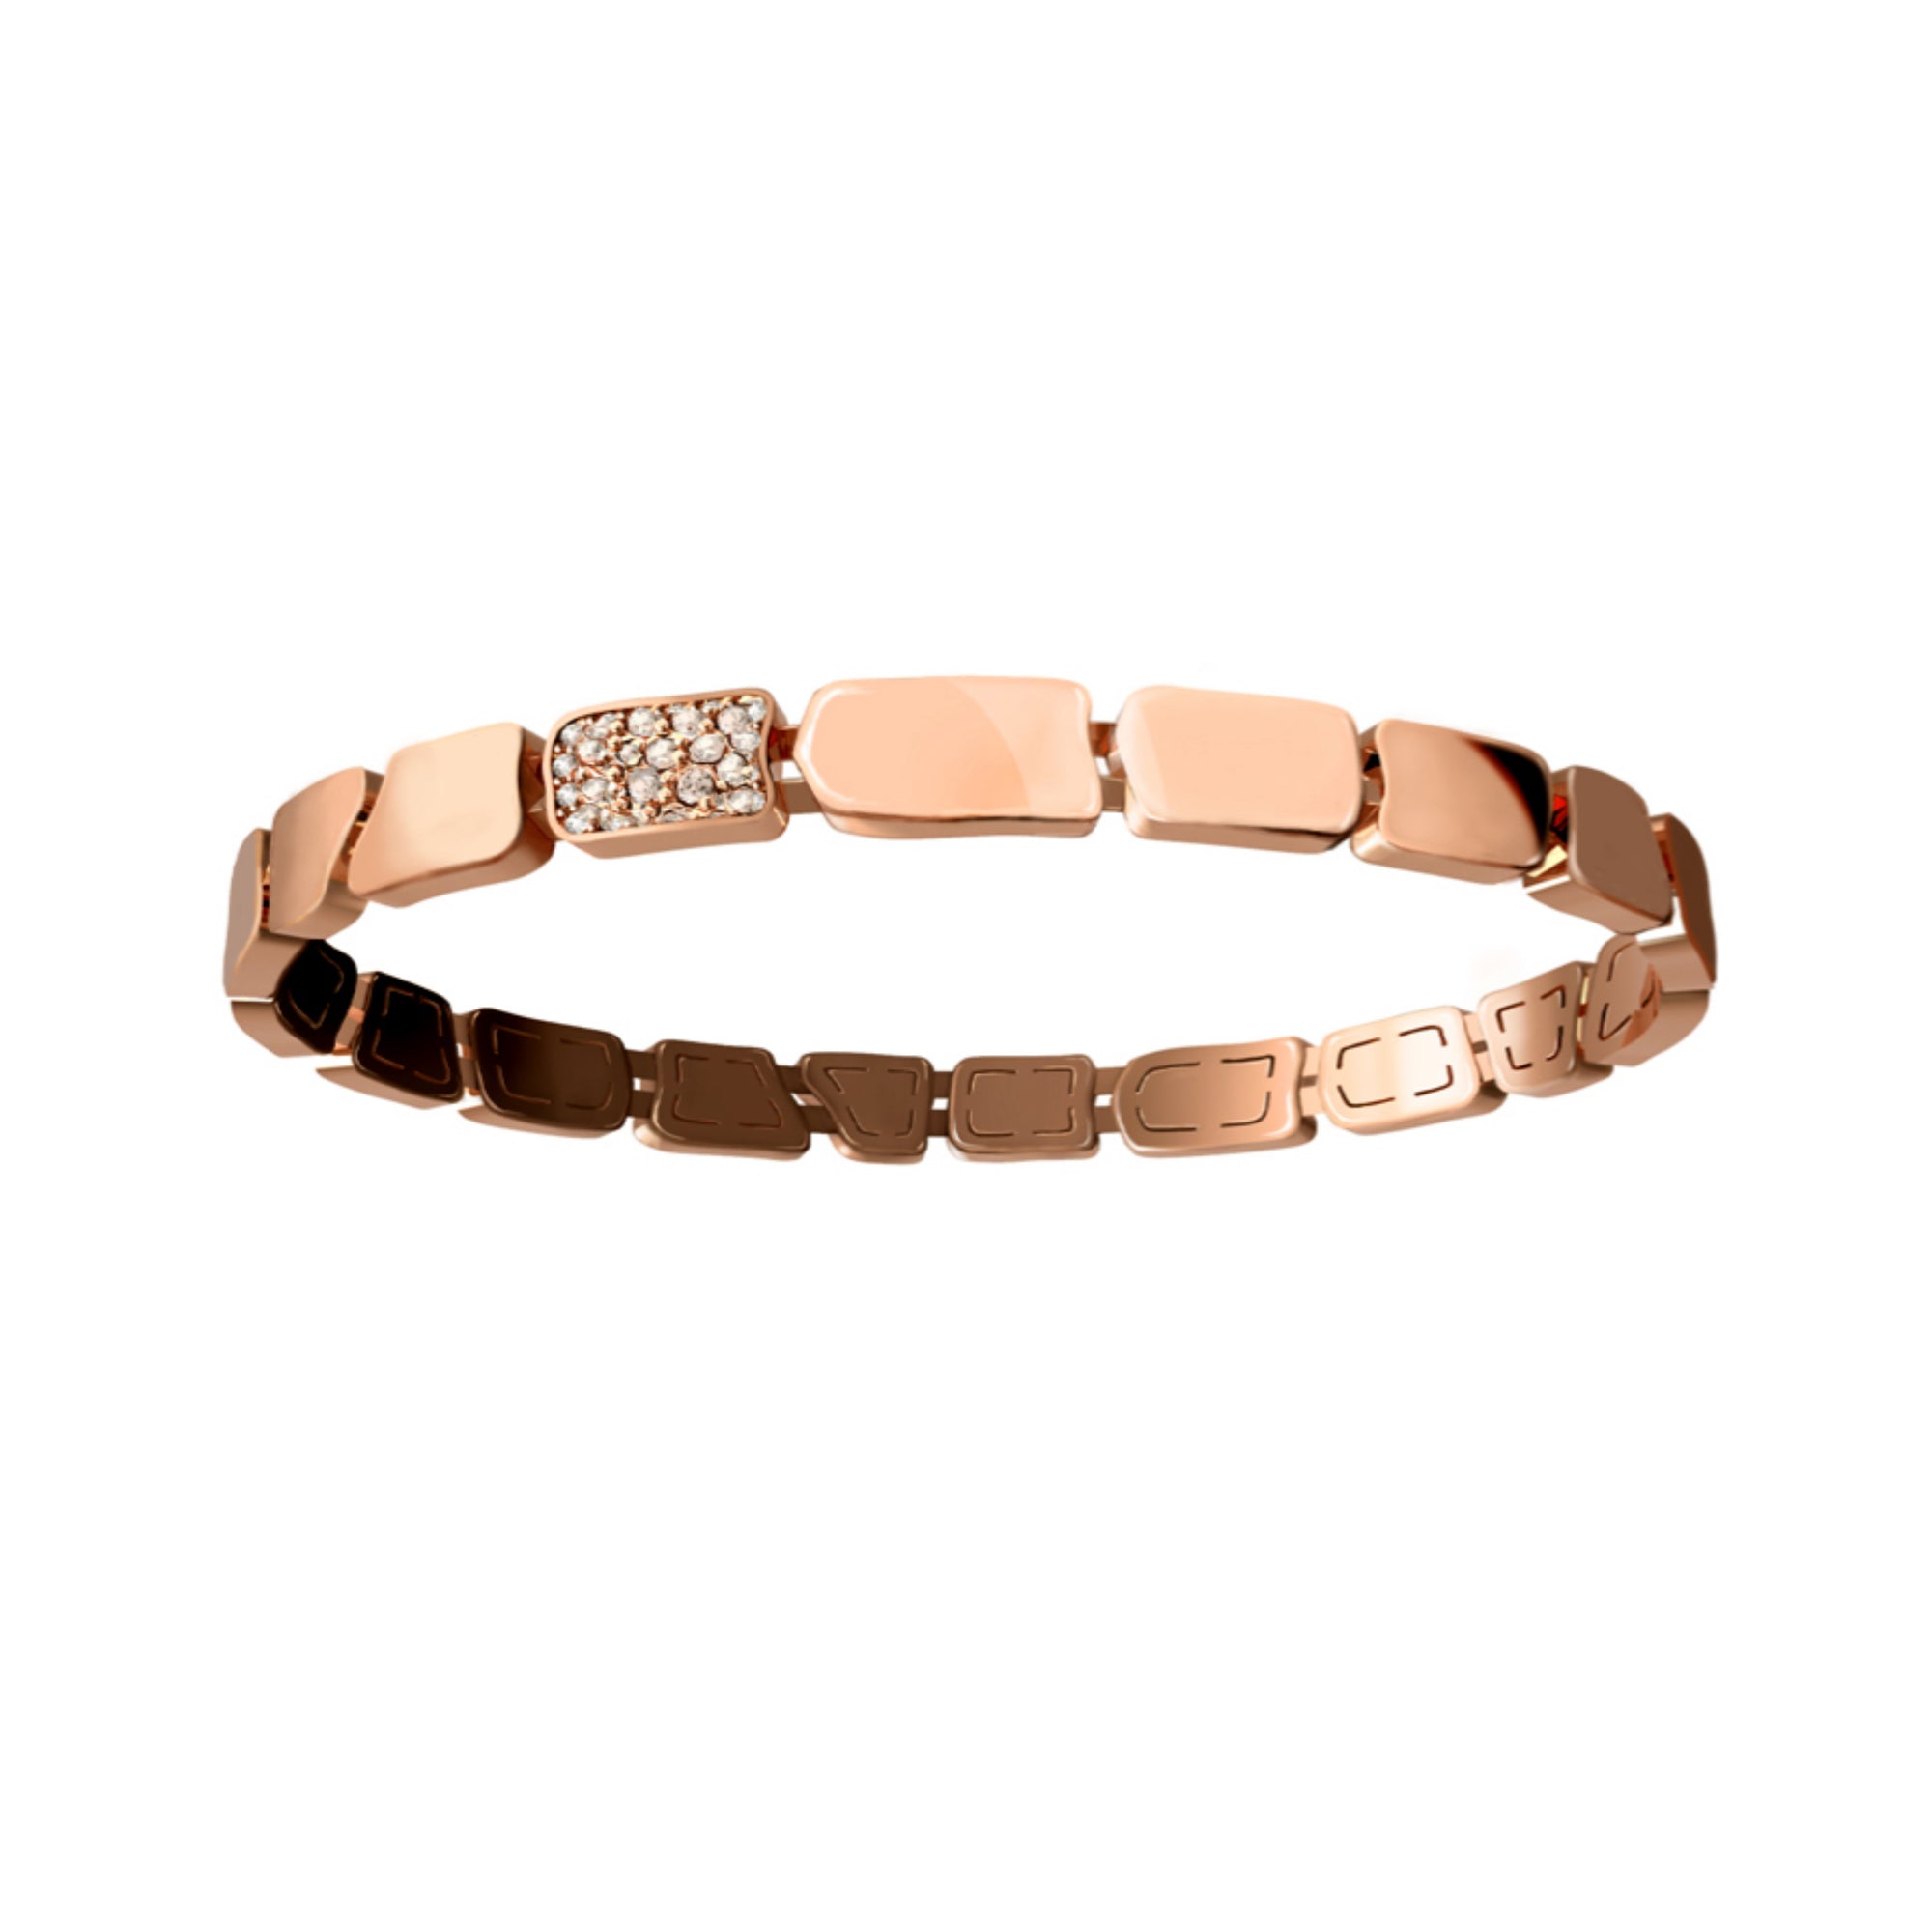 SKIN DIAMOND BRACELET ROSE GOLD | Bracelet | 18K rose gold, bracelet, crocodream, diamonds, skin | ORLOV